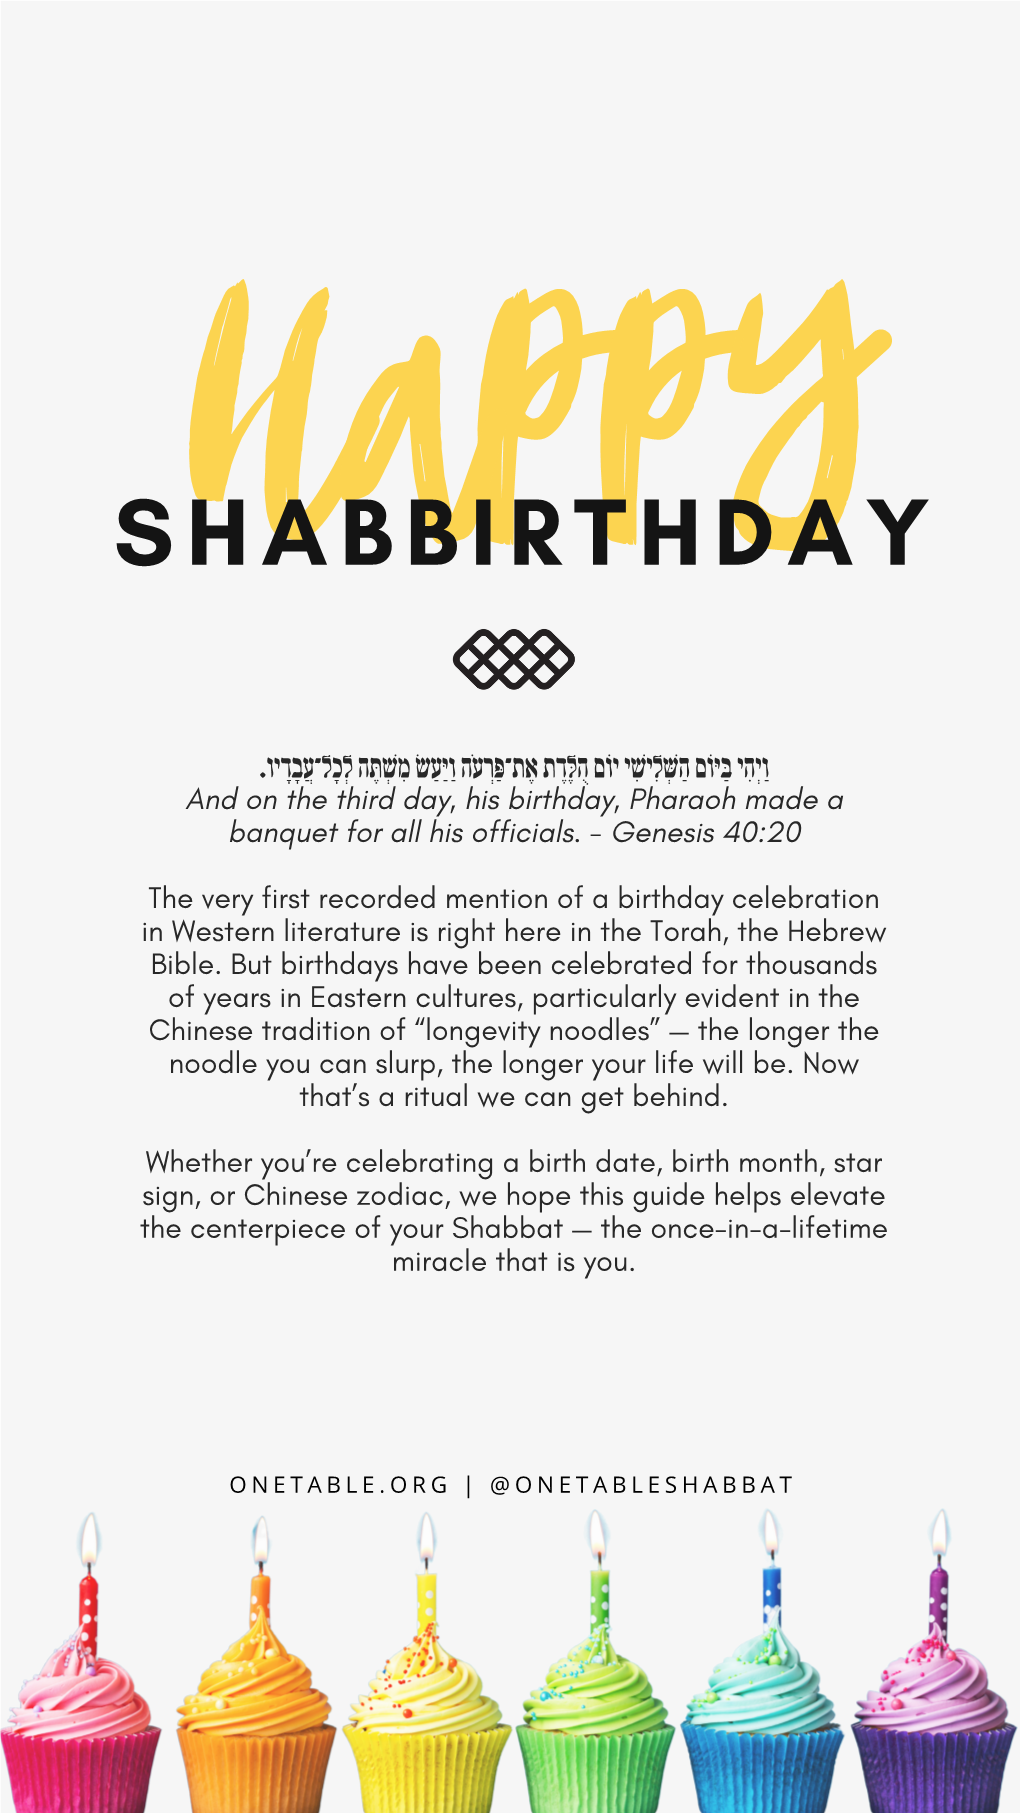 Shabirthday Guide